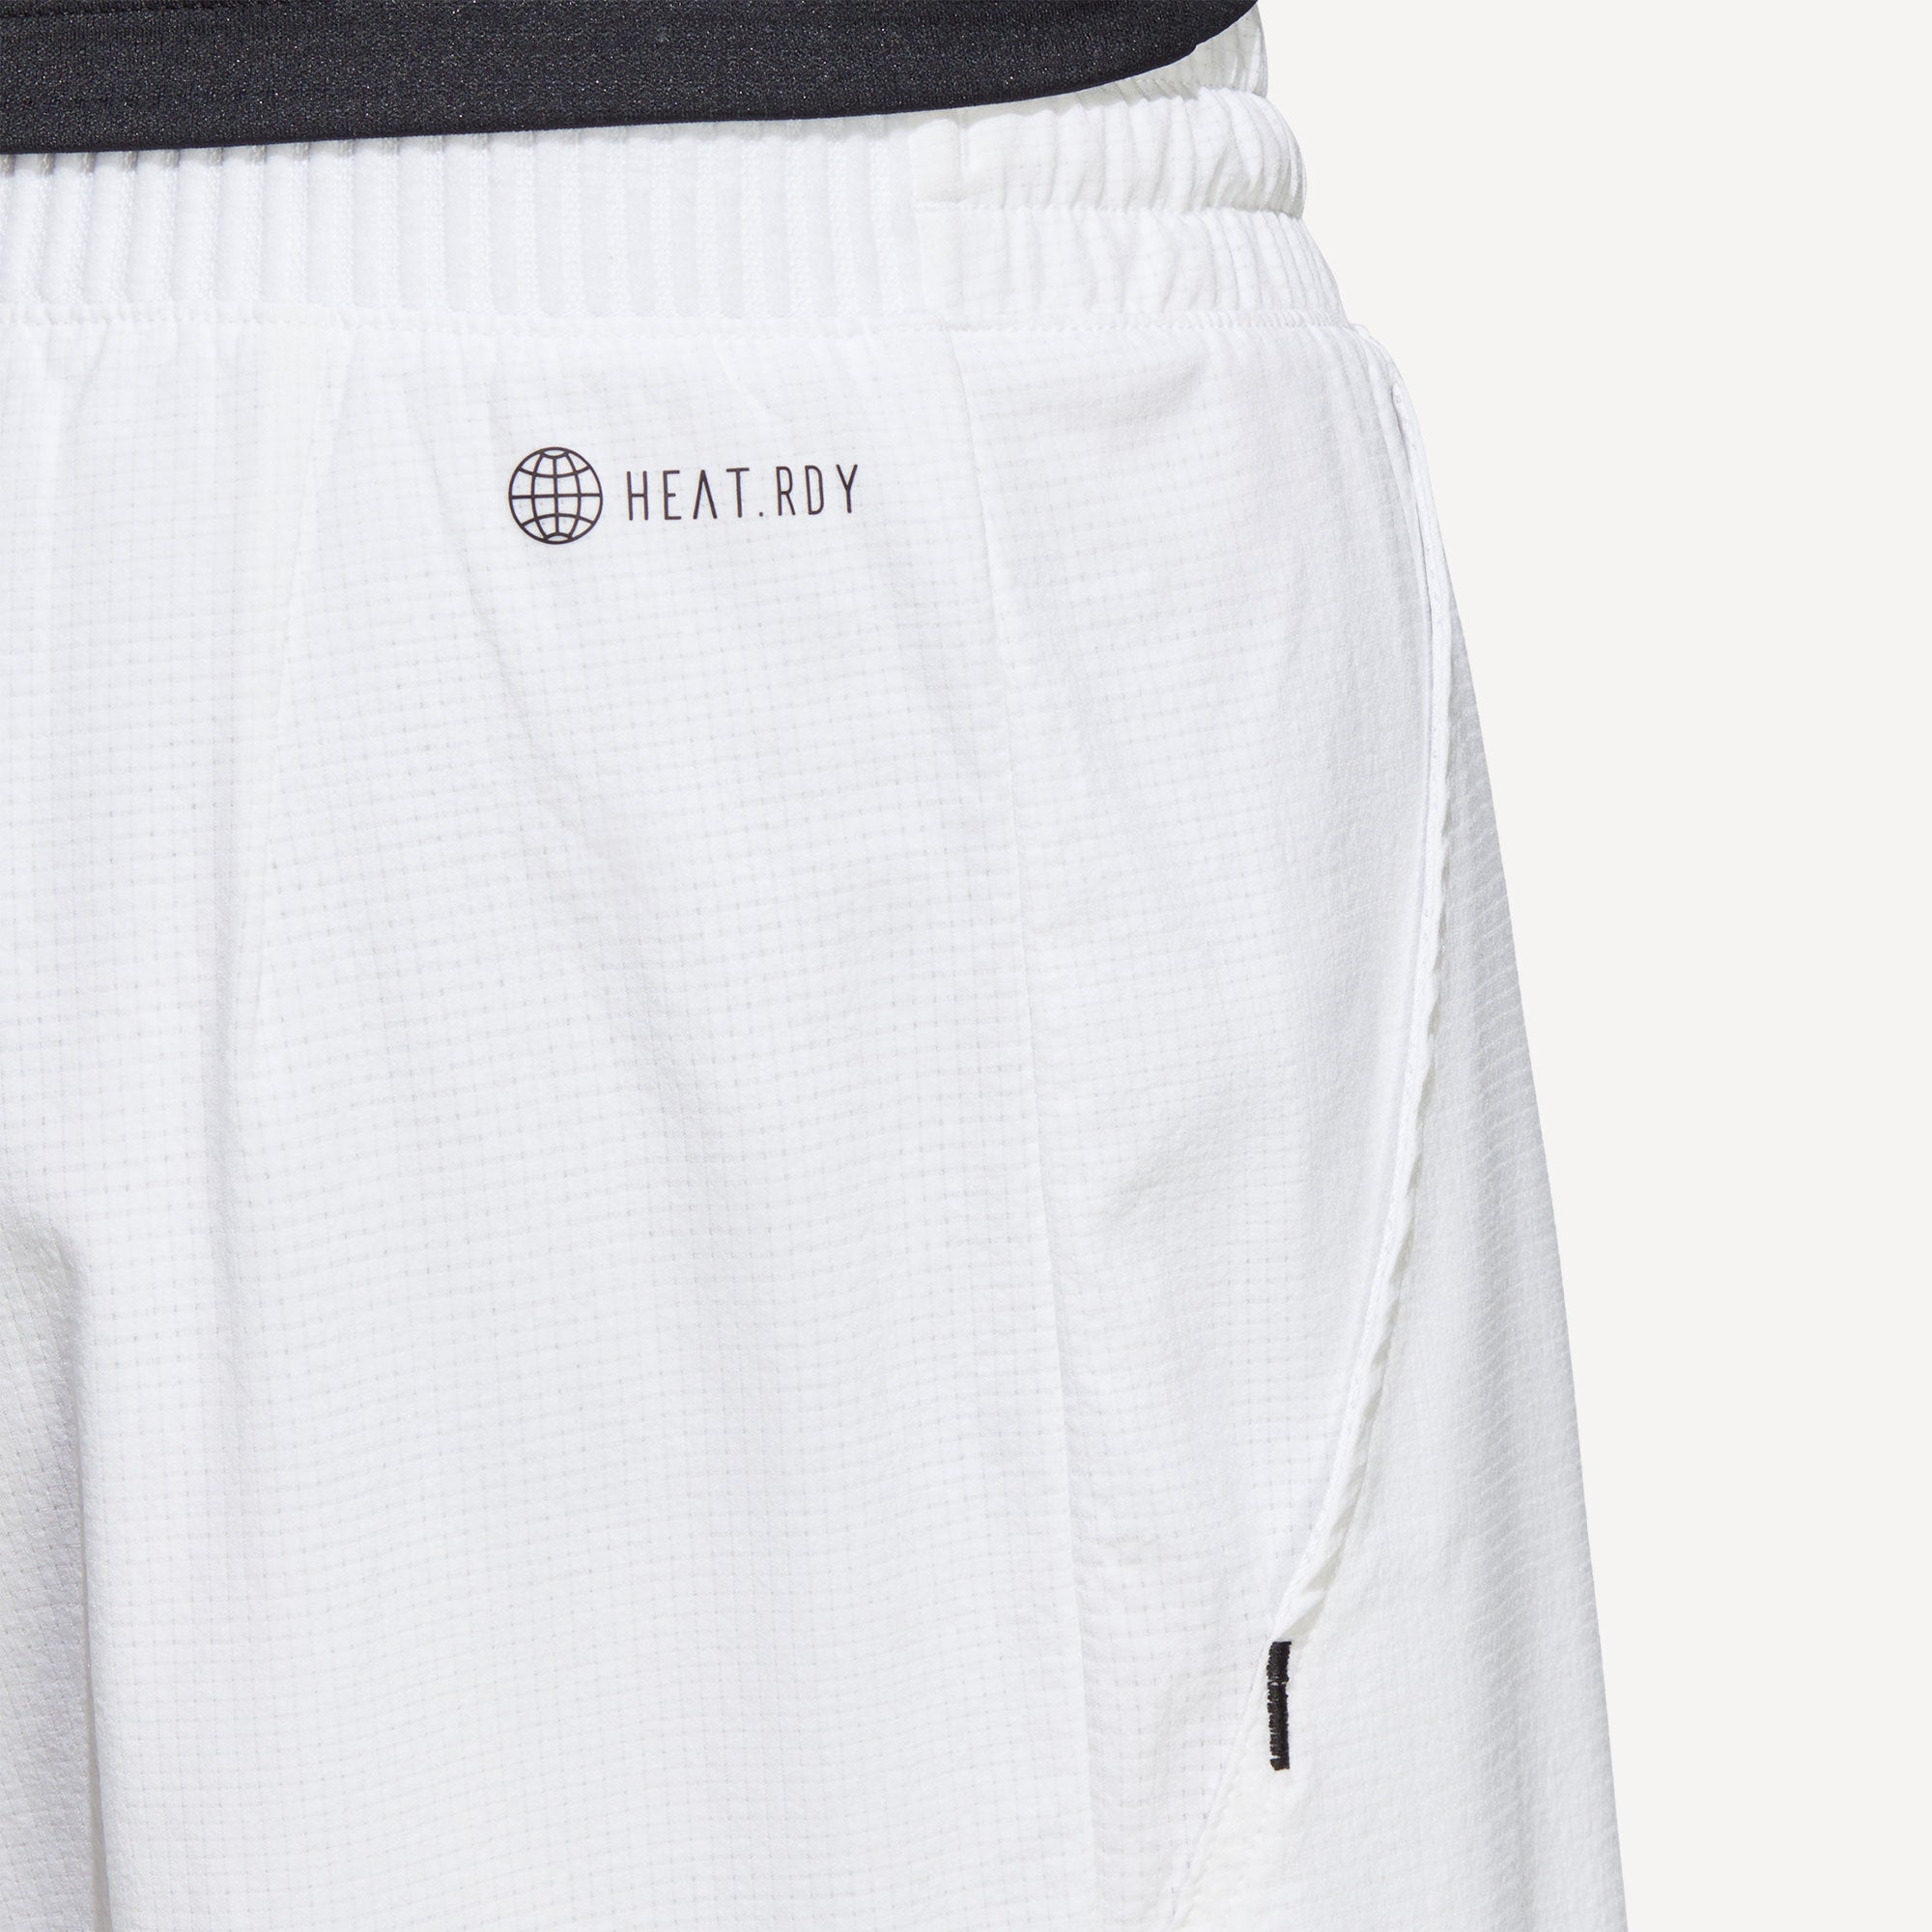 adidas Ergo Men's 9-Inch Tennis Shorts White (7)